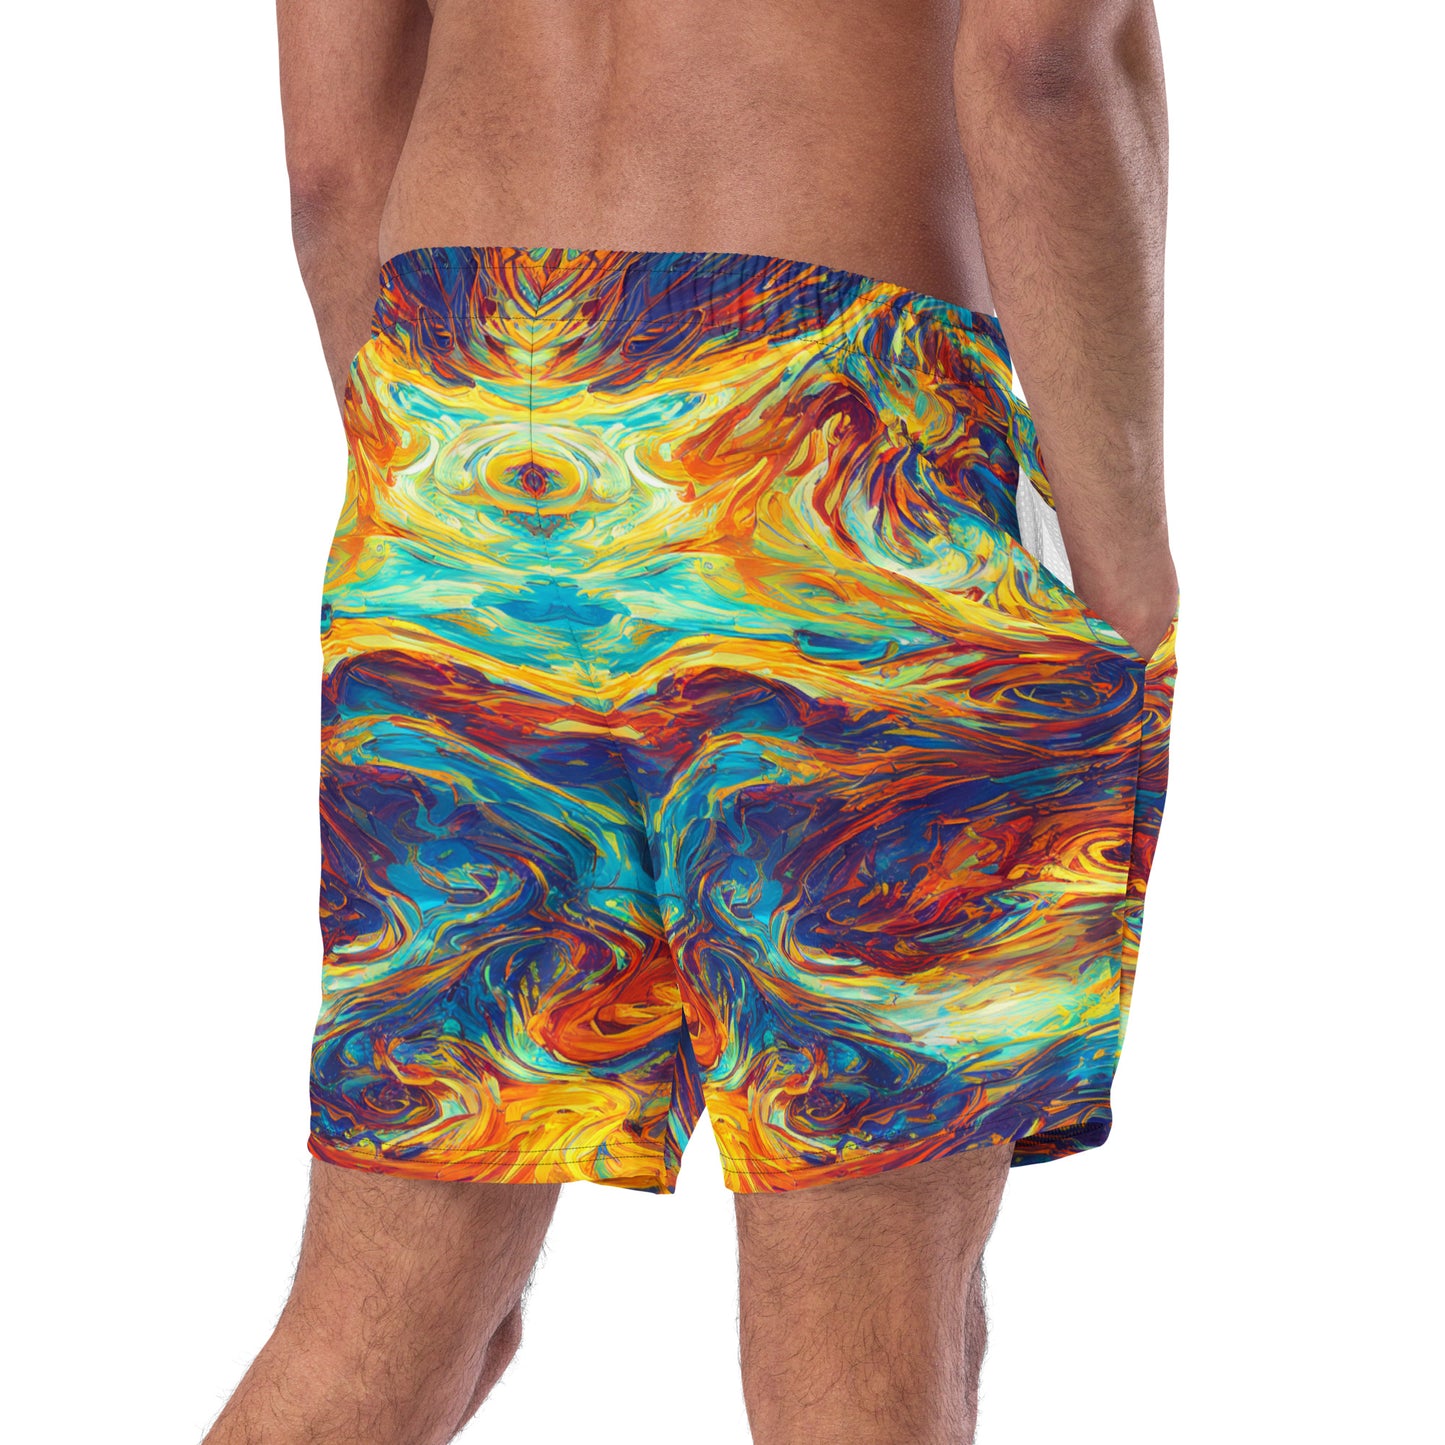 Flaming Confusion : Men's swim trunks